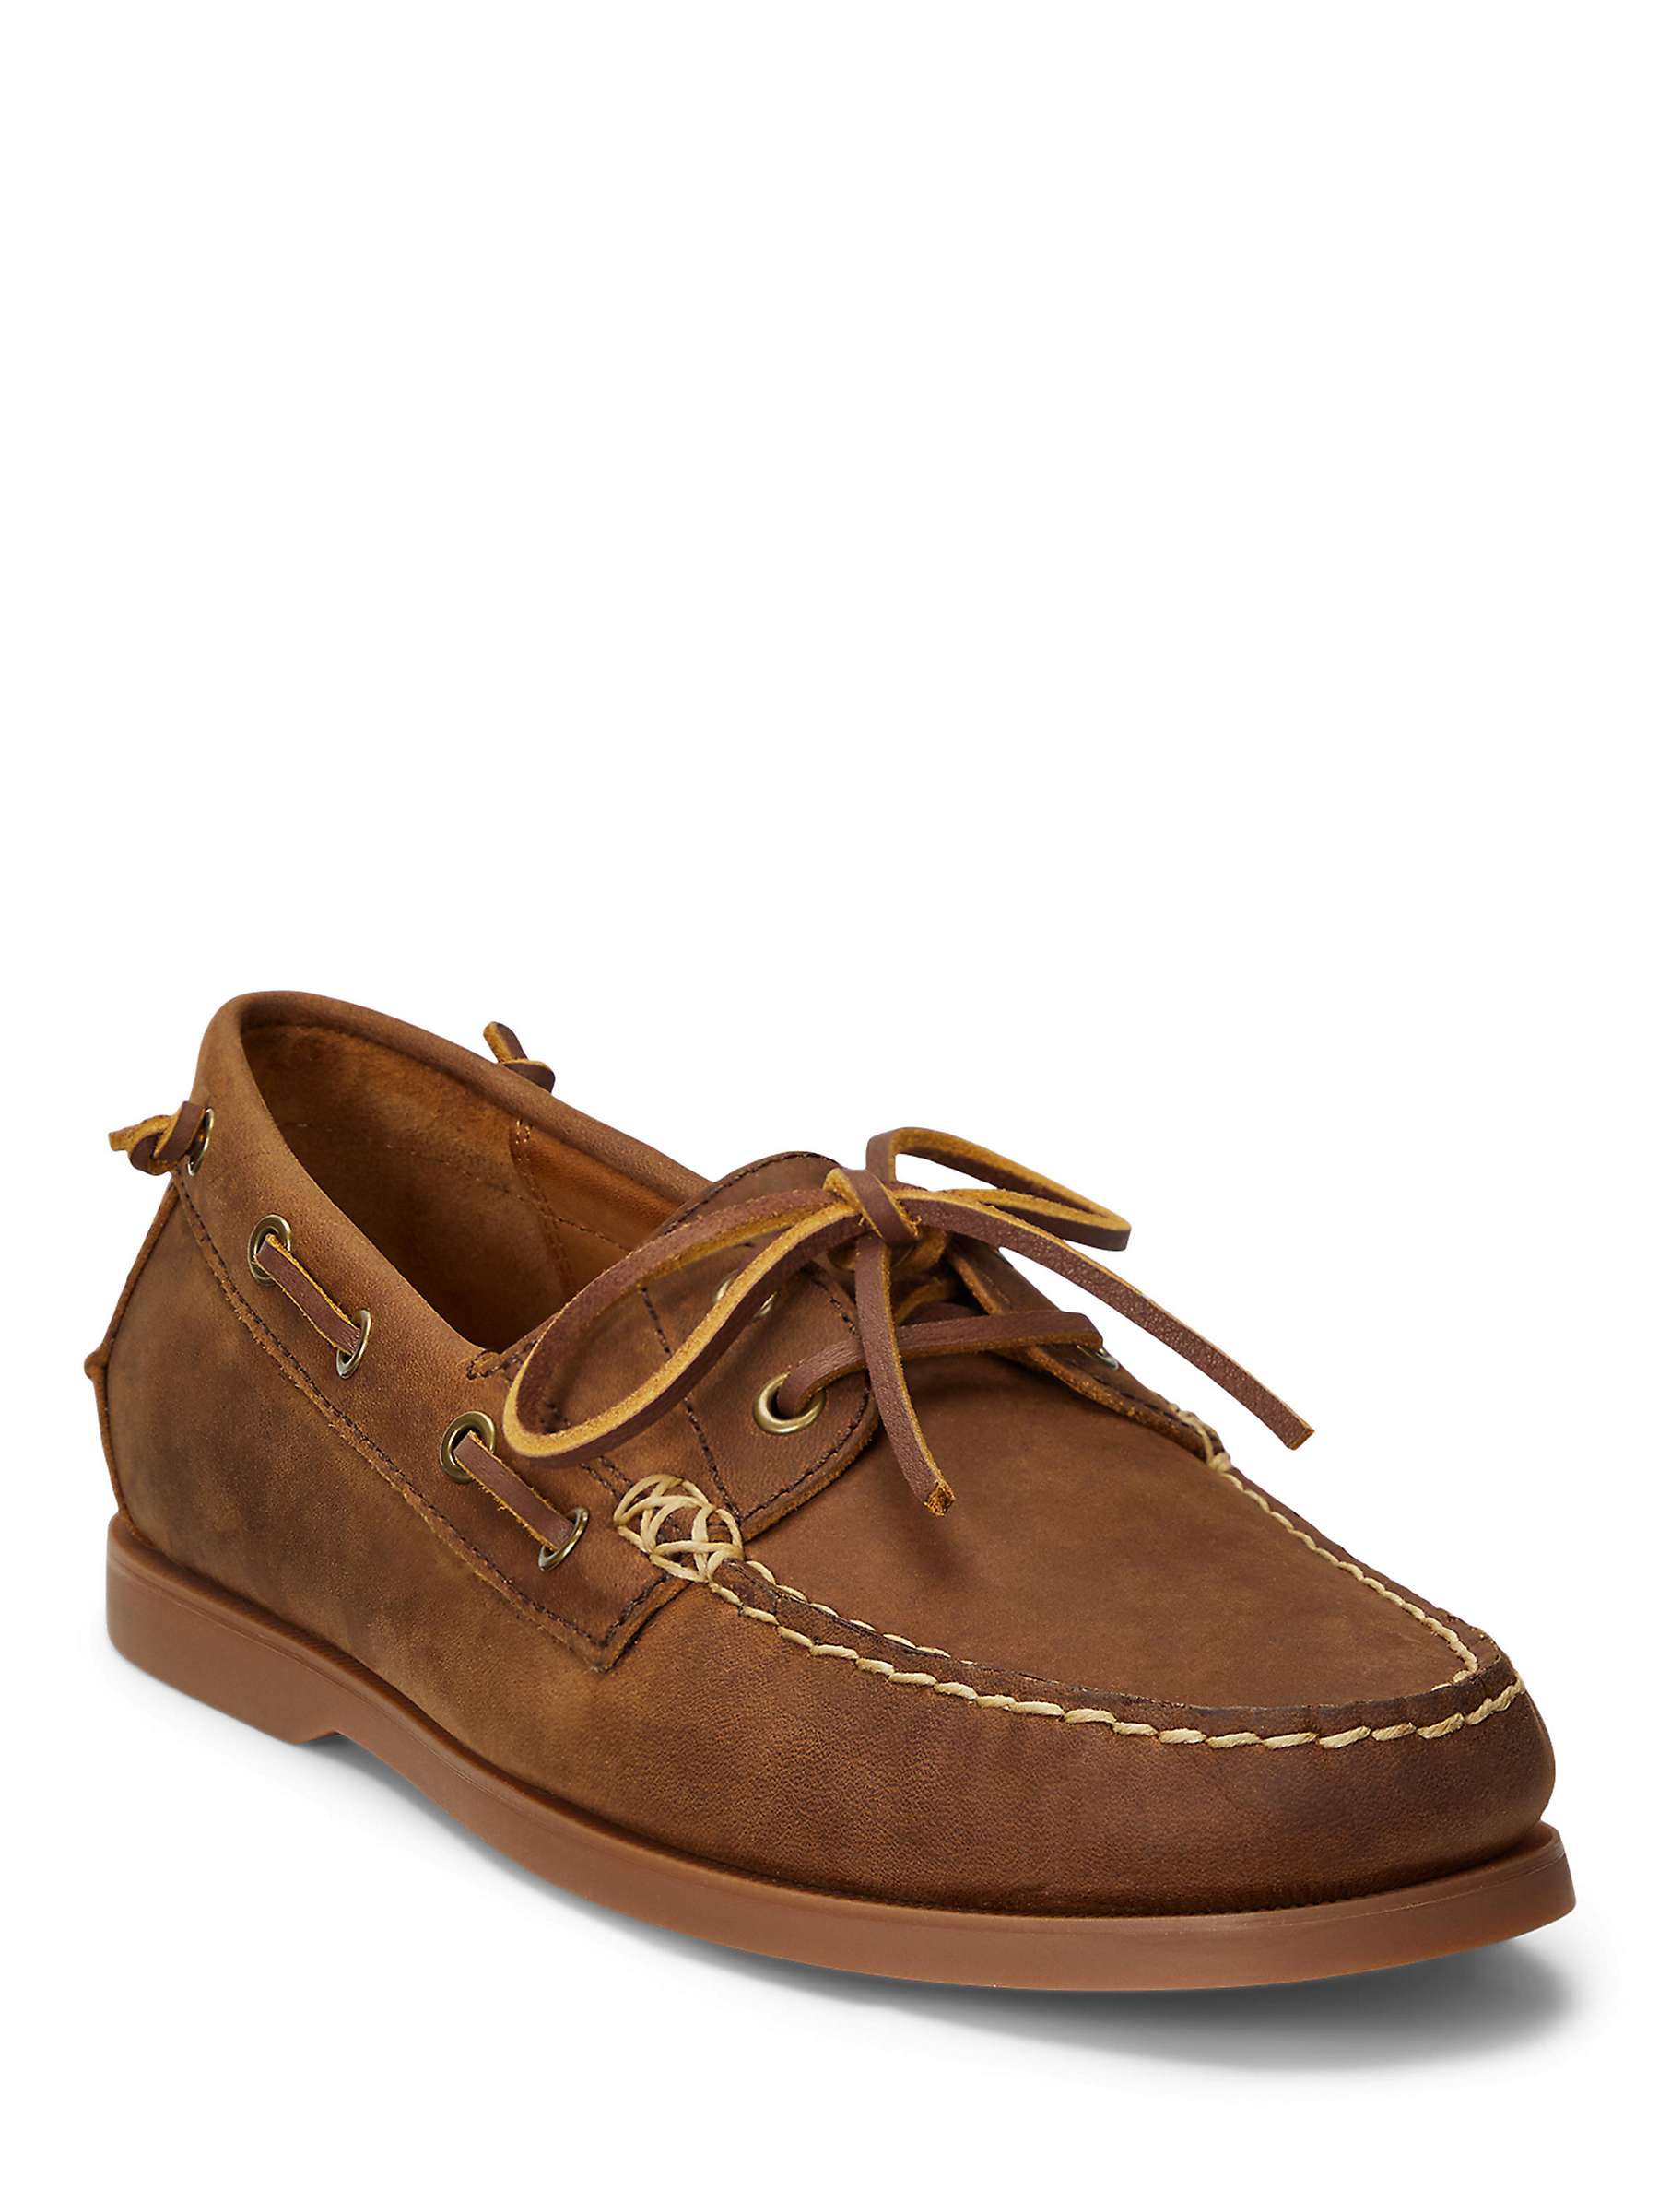 Buy Ralph Lauren Merton Deep Saddle Boat Shoes, Tan Online at johnlewis.com